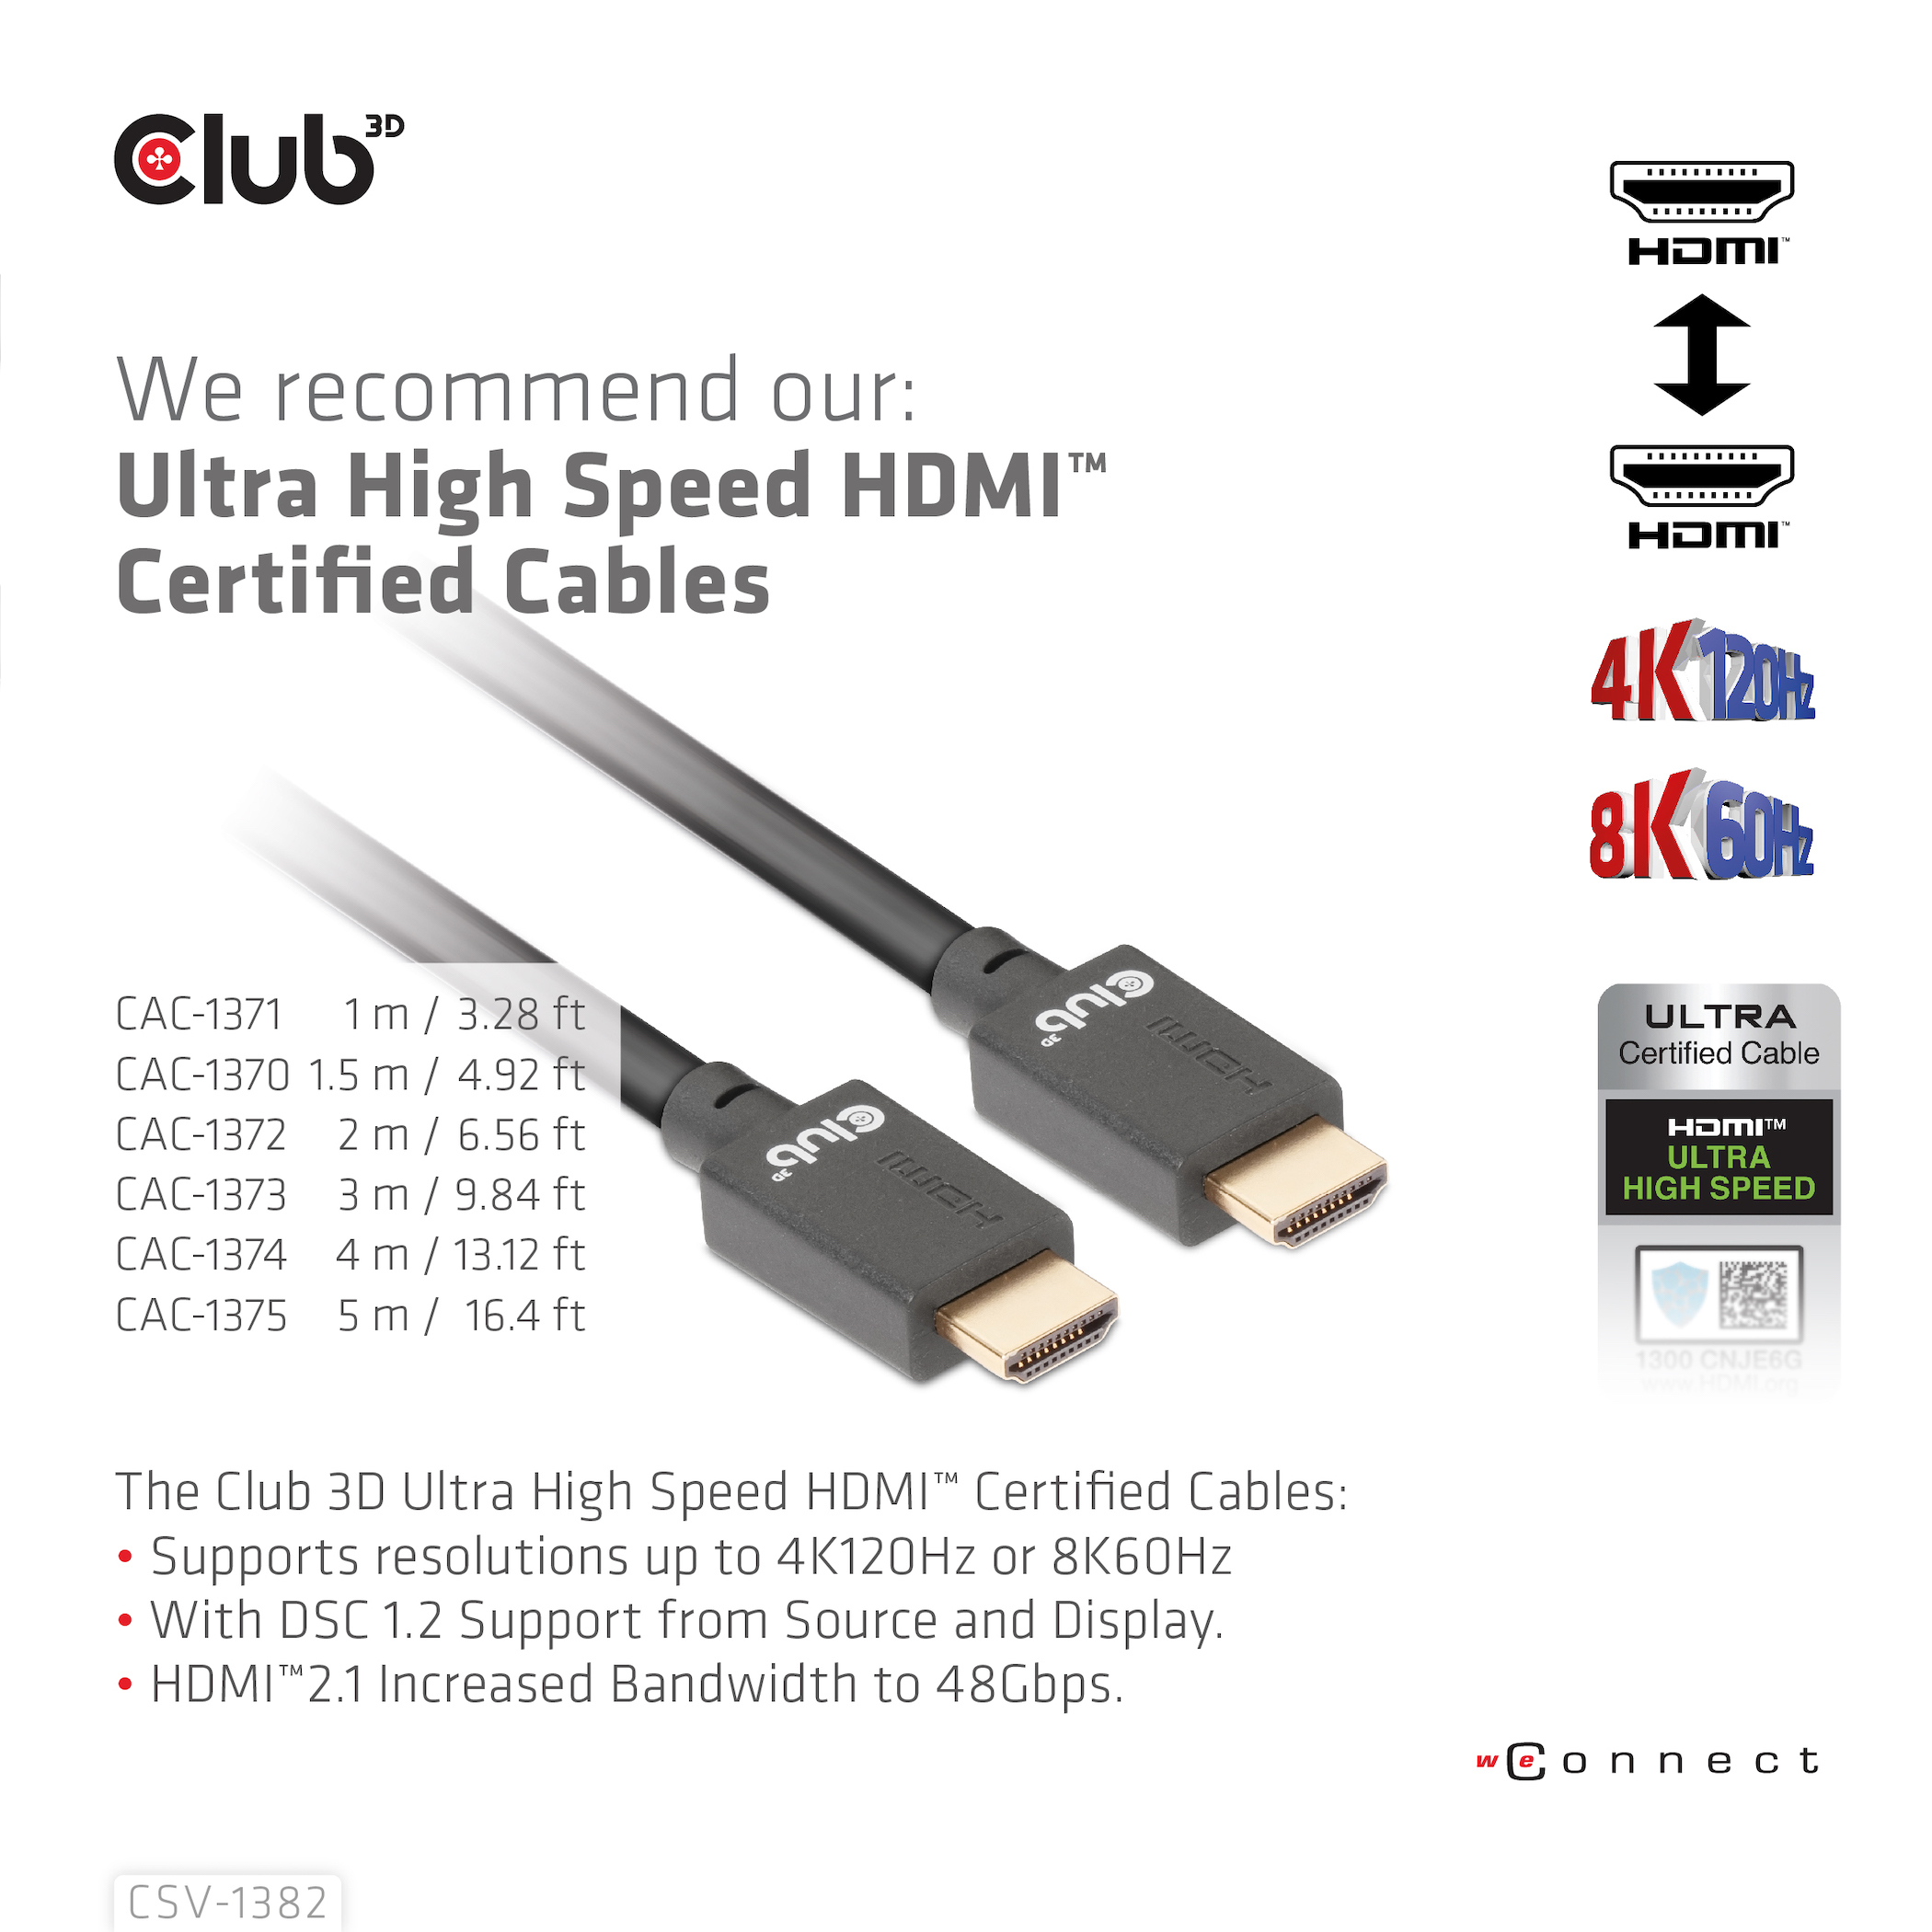 HDMI KVM SWITCH FOR DUAL HDMI 4K60HZ